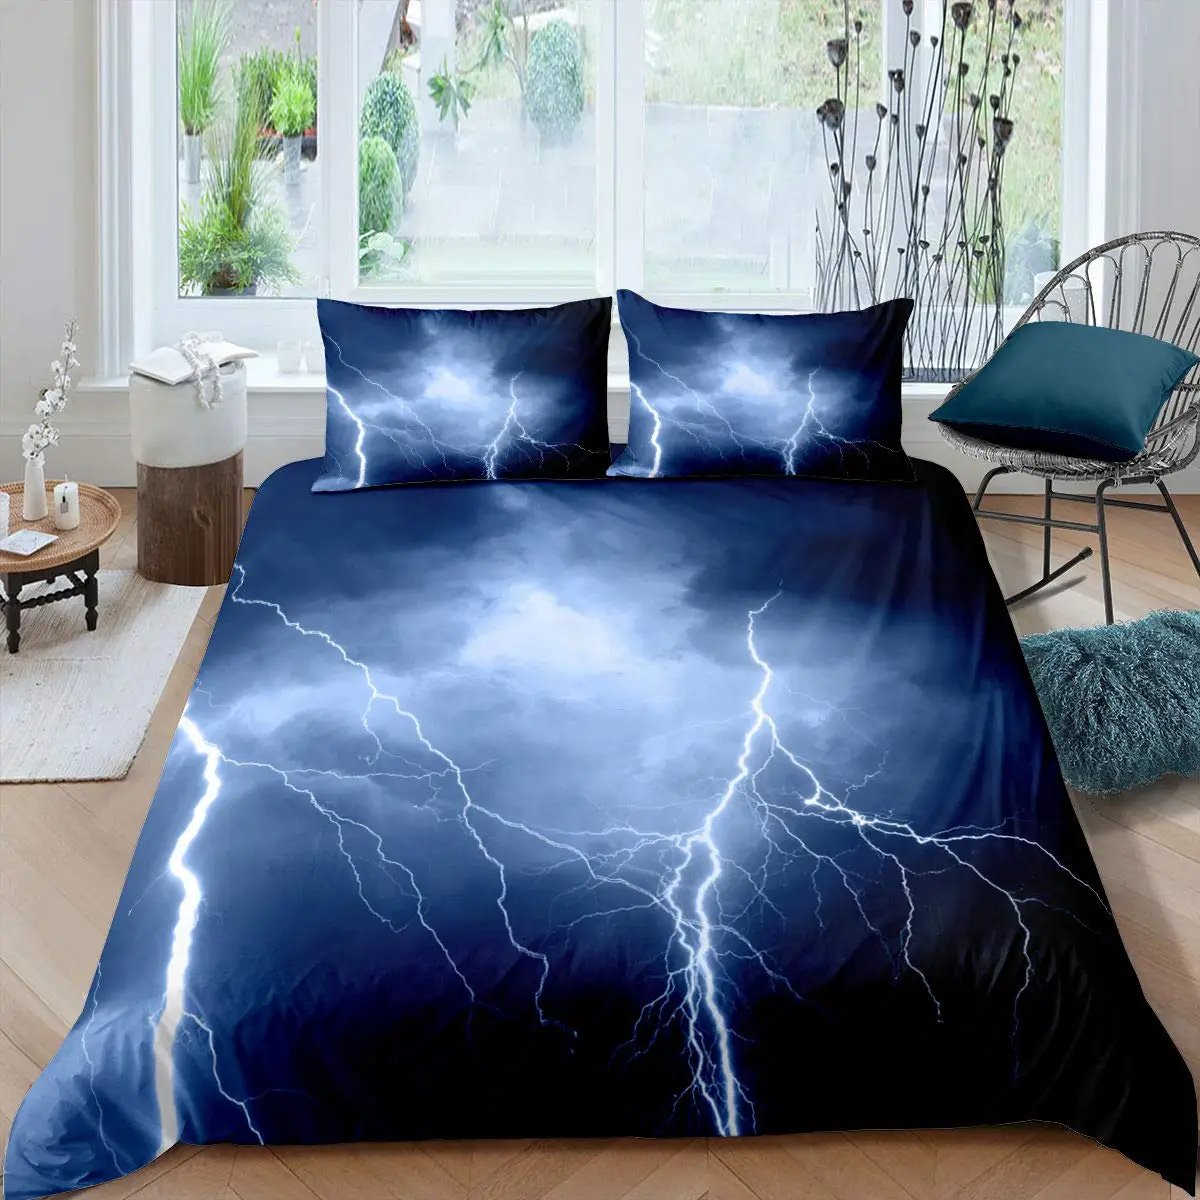 

Thunder and Lightning Duvet Cover Set Cloud Natural Disaster Landscape Bedding Set Polyester Comforter Cover for Kid Teen Adult